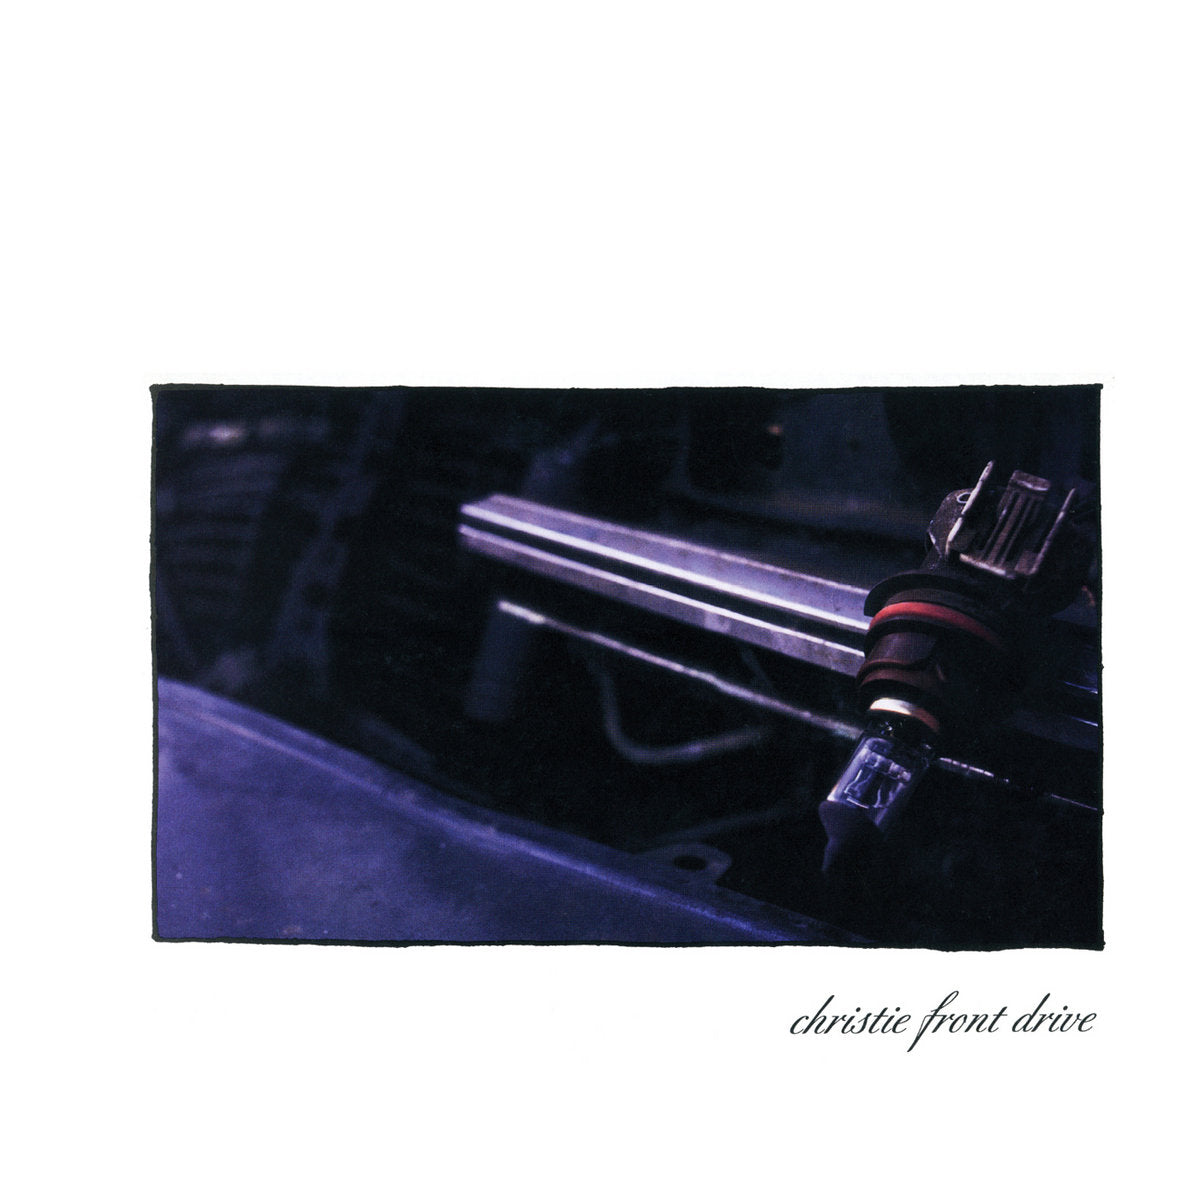 Christie Front Drive "First LP" 12" Vinyl